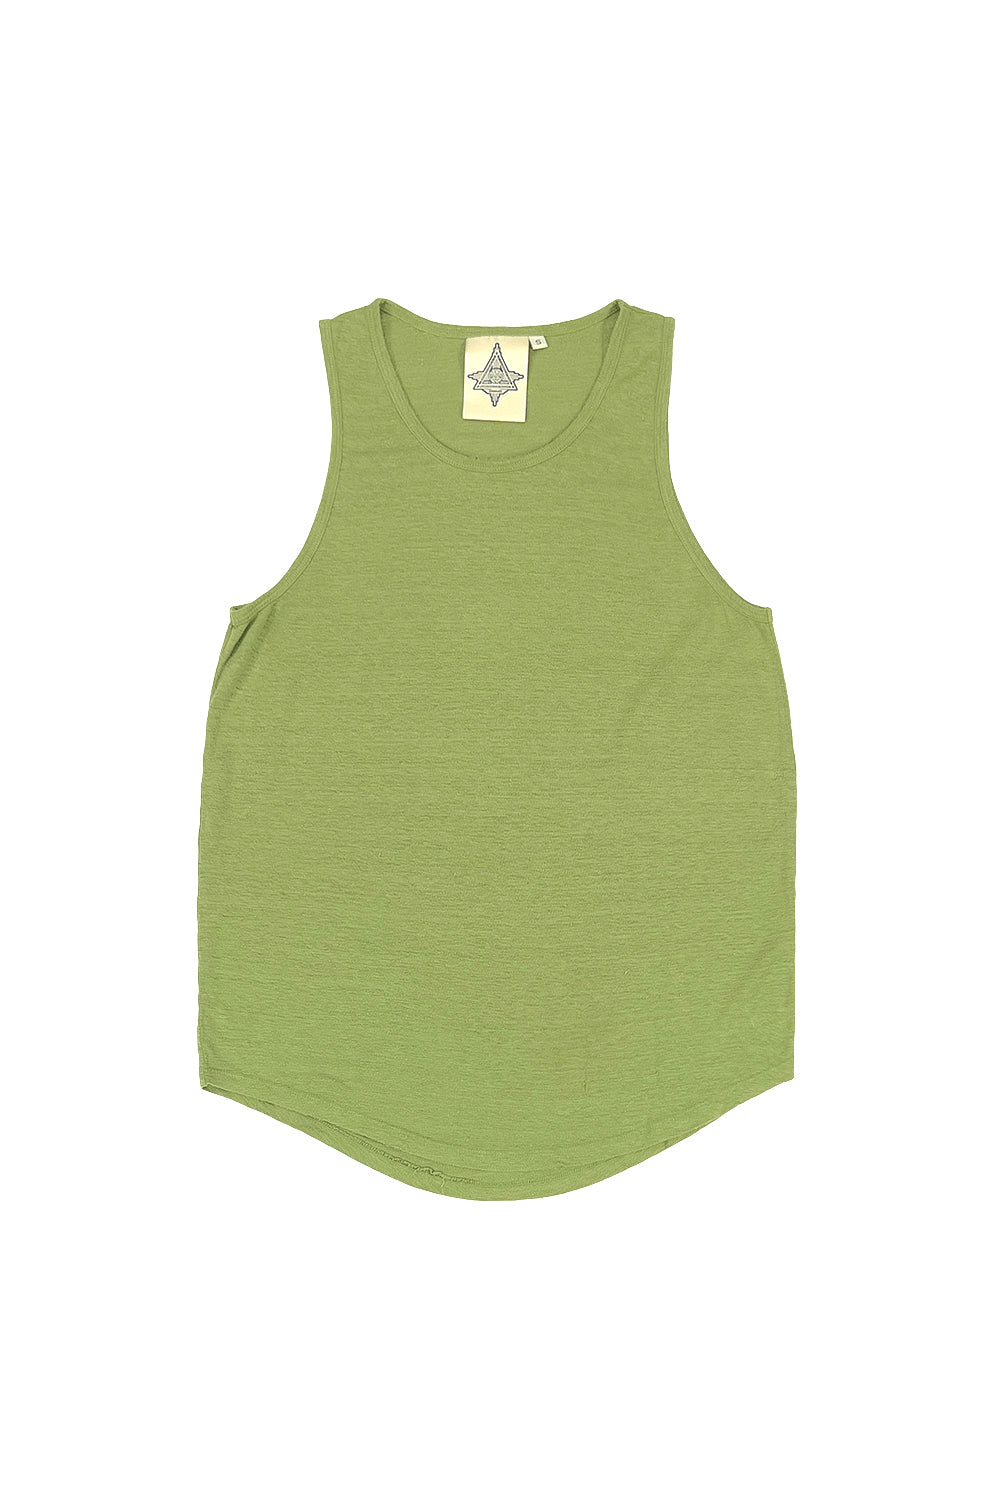 Playa 100% Tank Top | Jungmaven Hemp Clothing & Accessories / Color: Dark Matcha